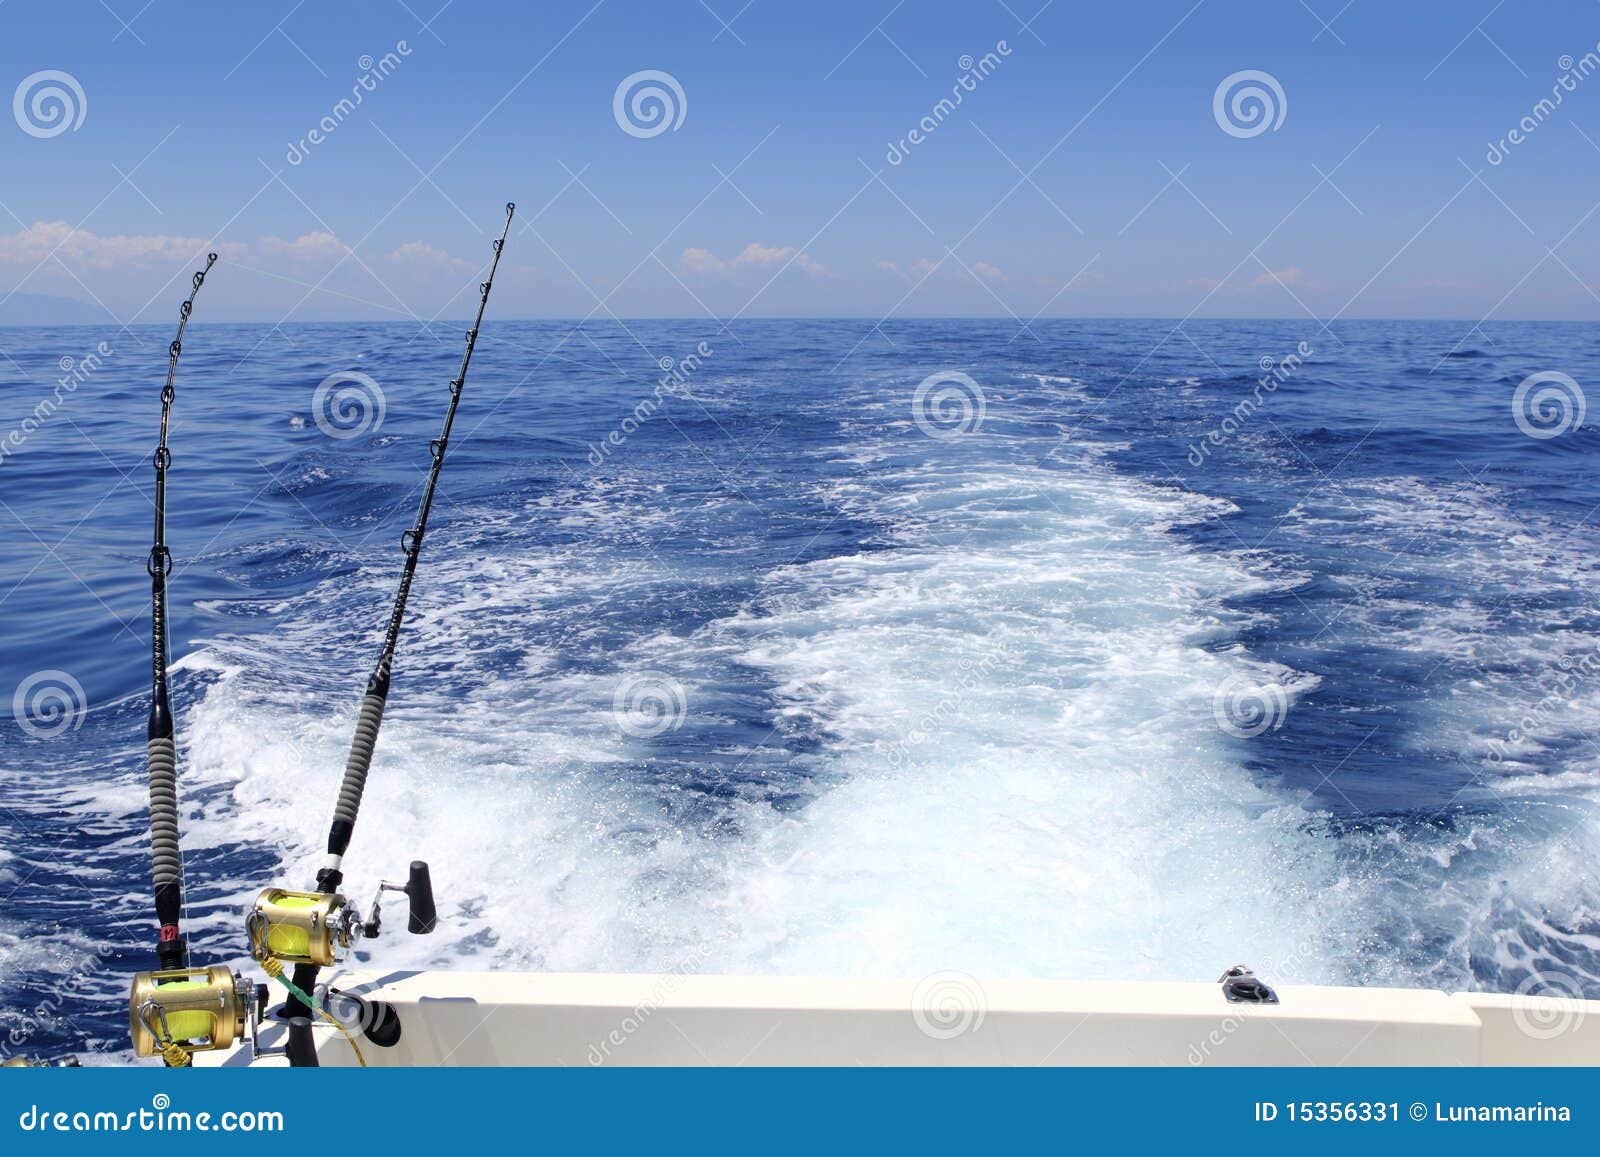 Blue Sea Fishing Sunny Day Trolling Rod Reels Wake Stock Image